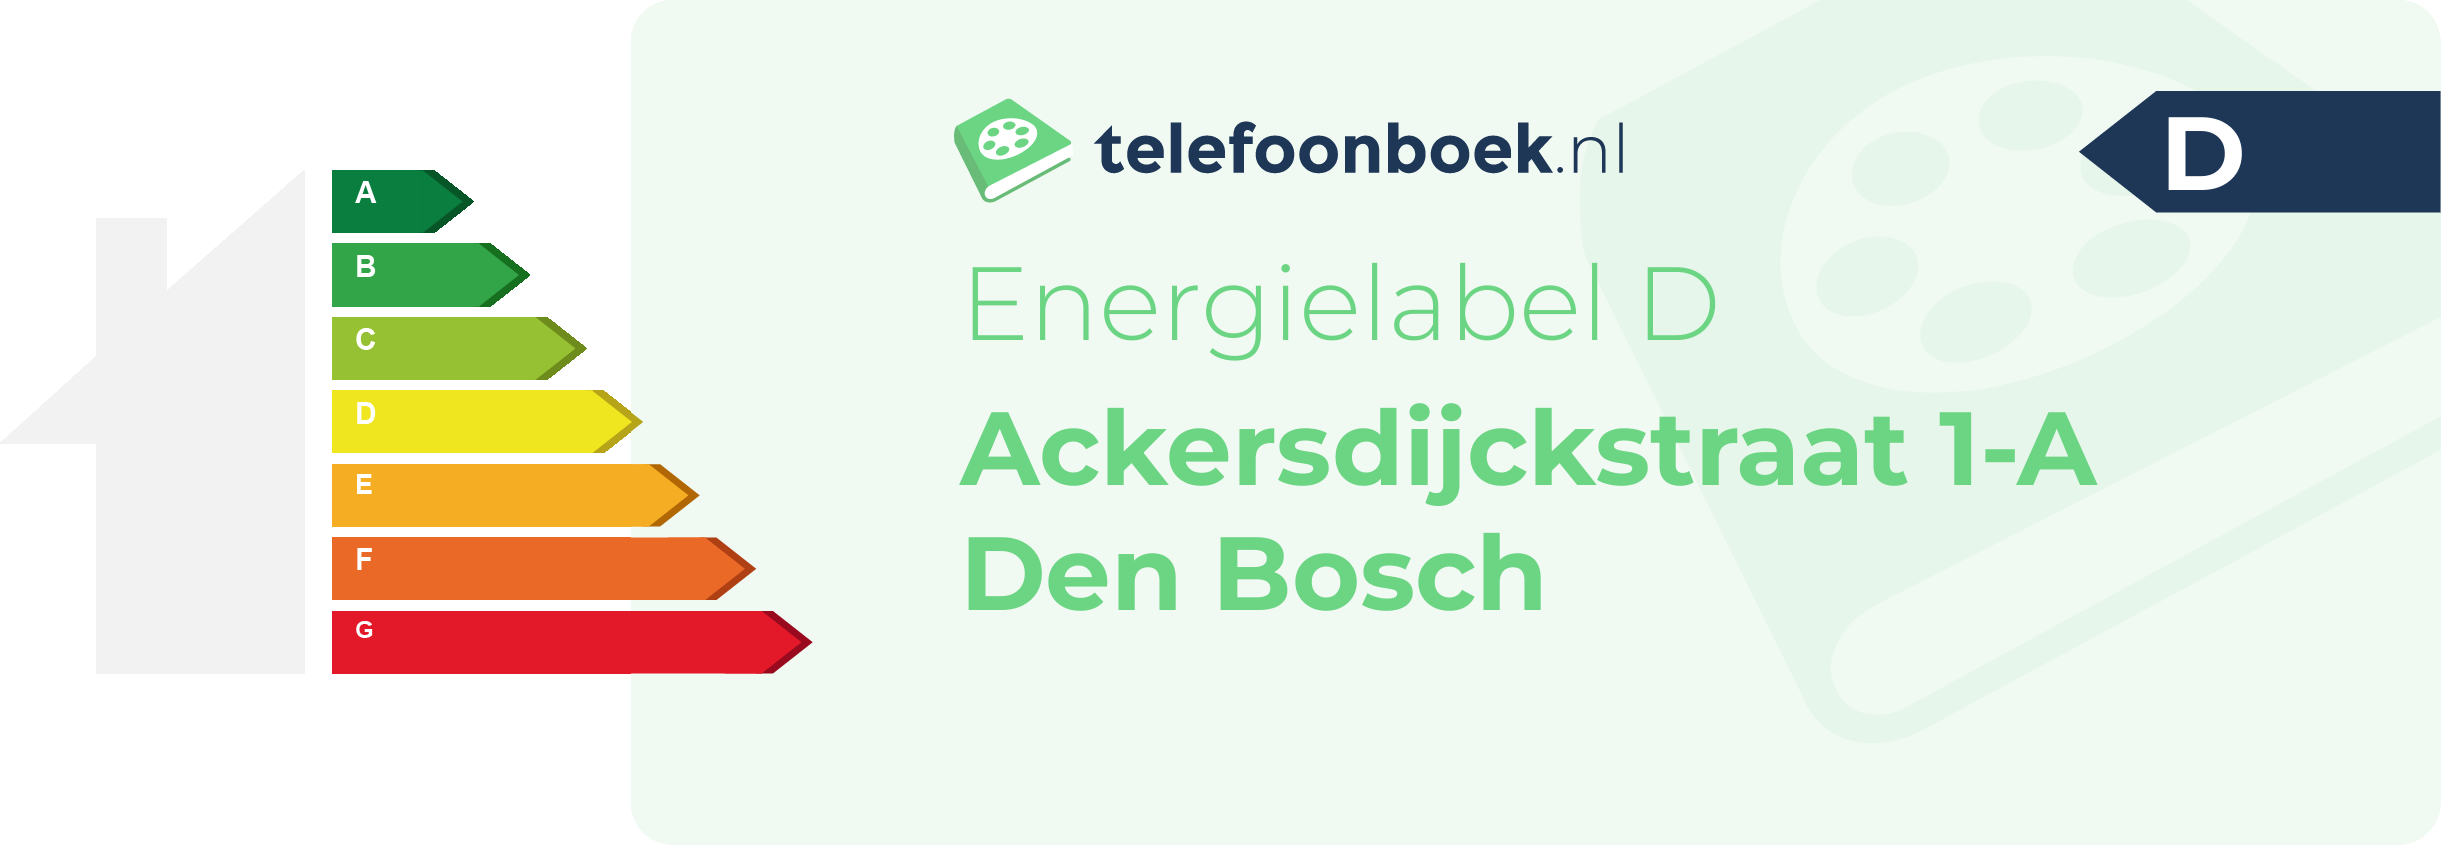 Energielabel Ackersdijckstraat 1-A Den Bosch